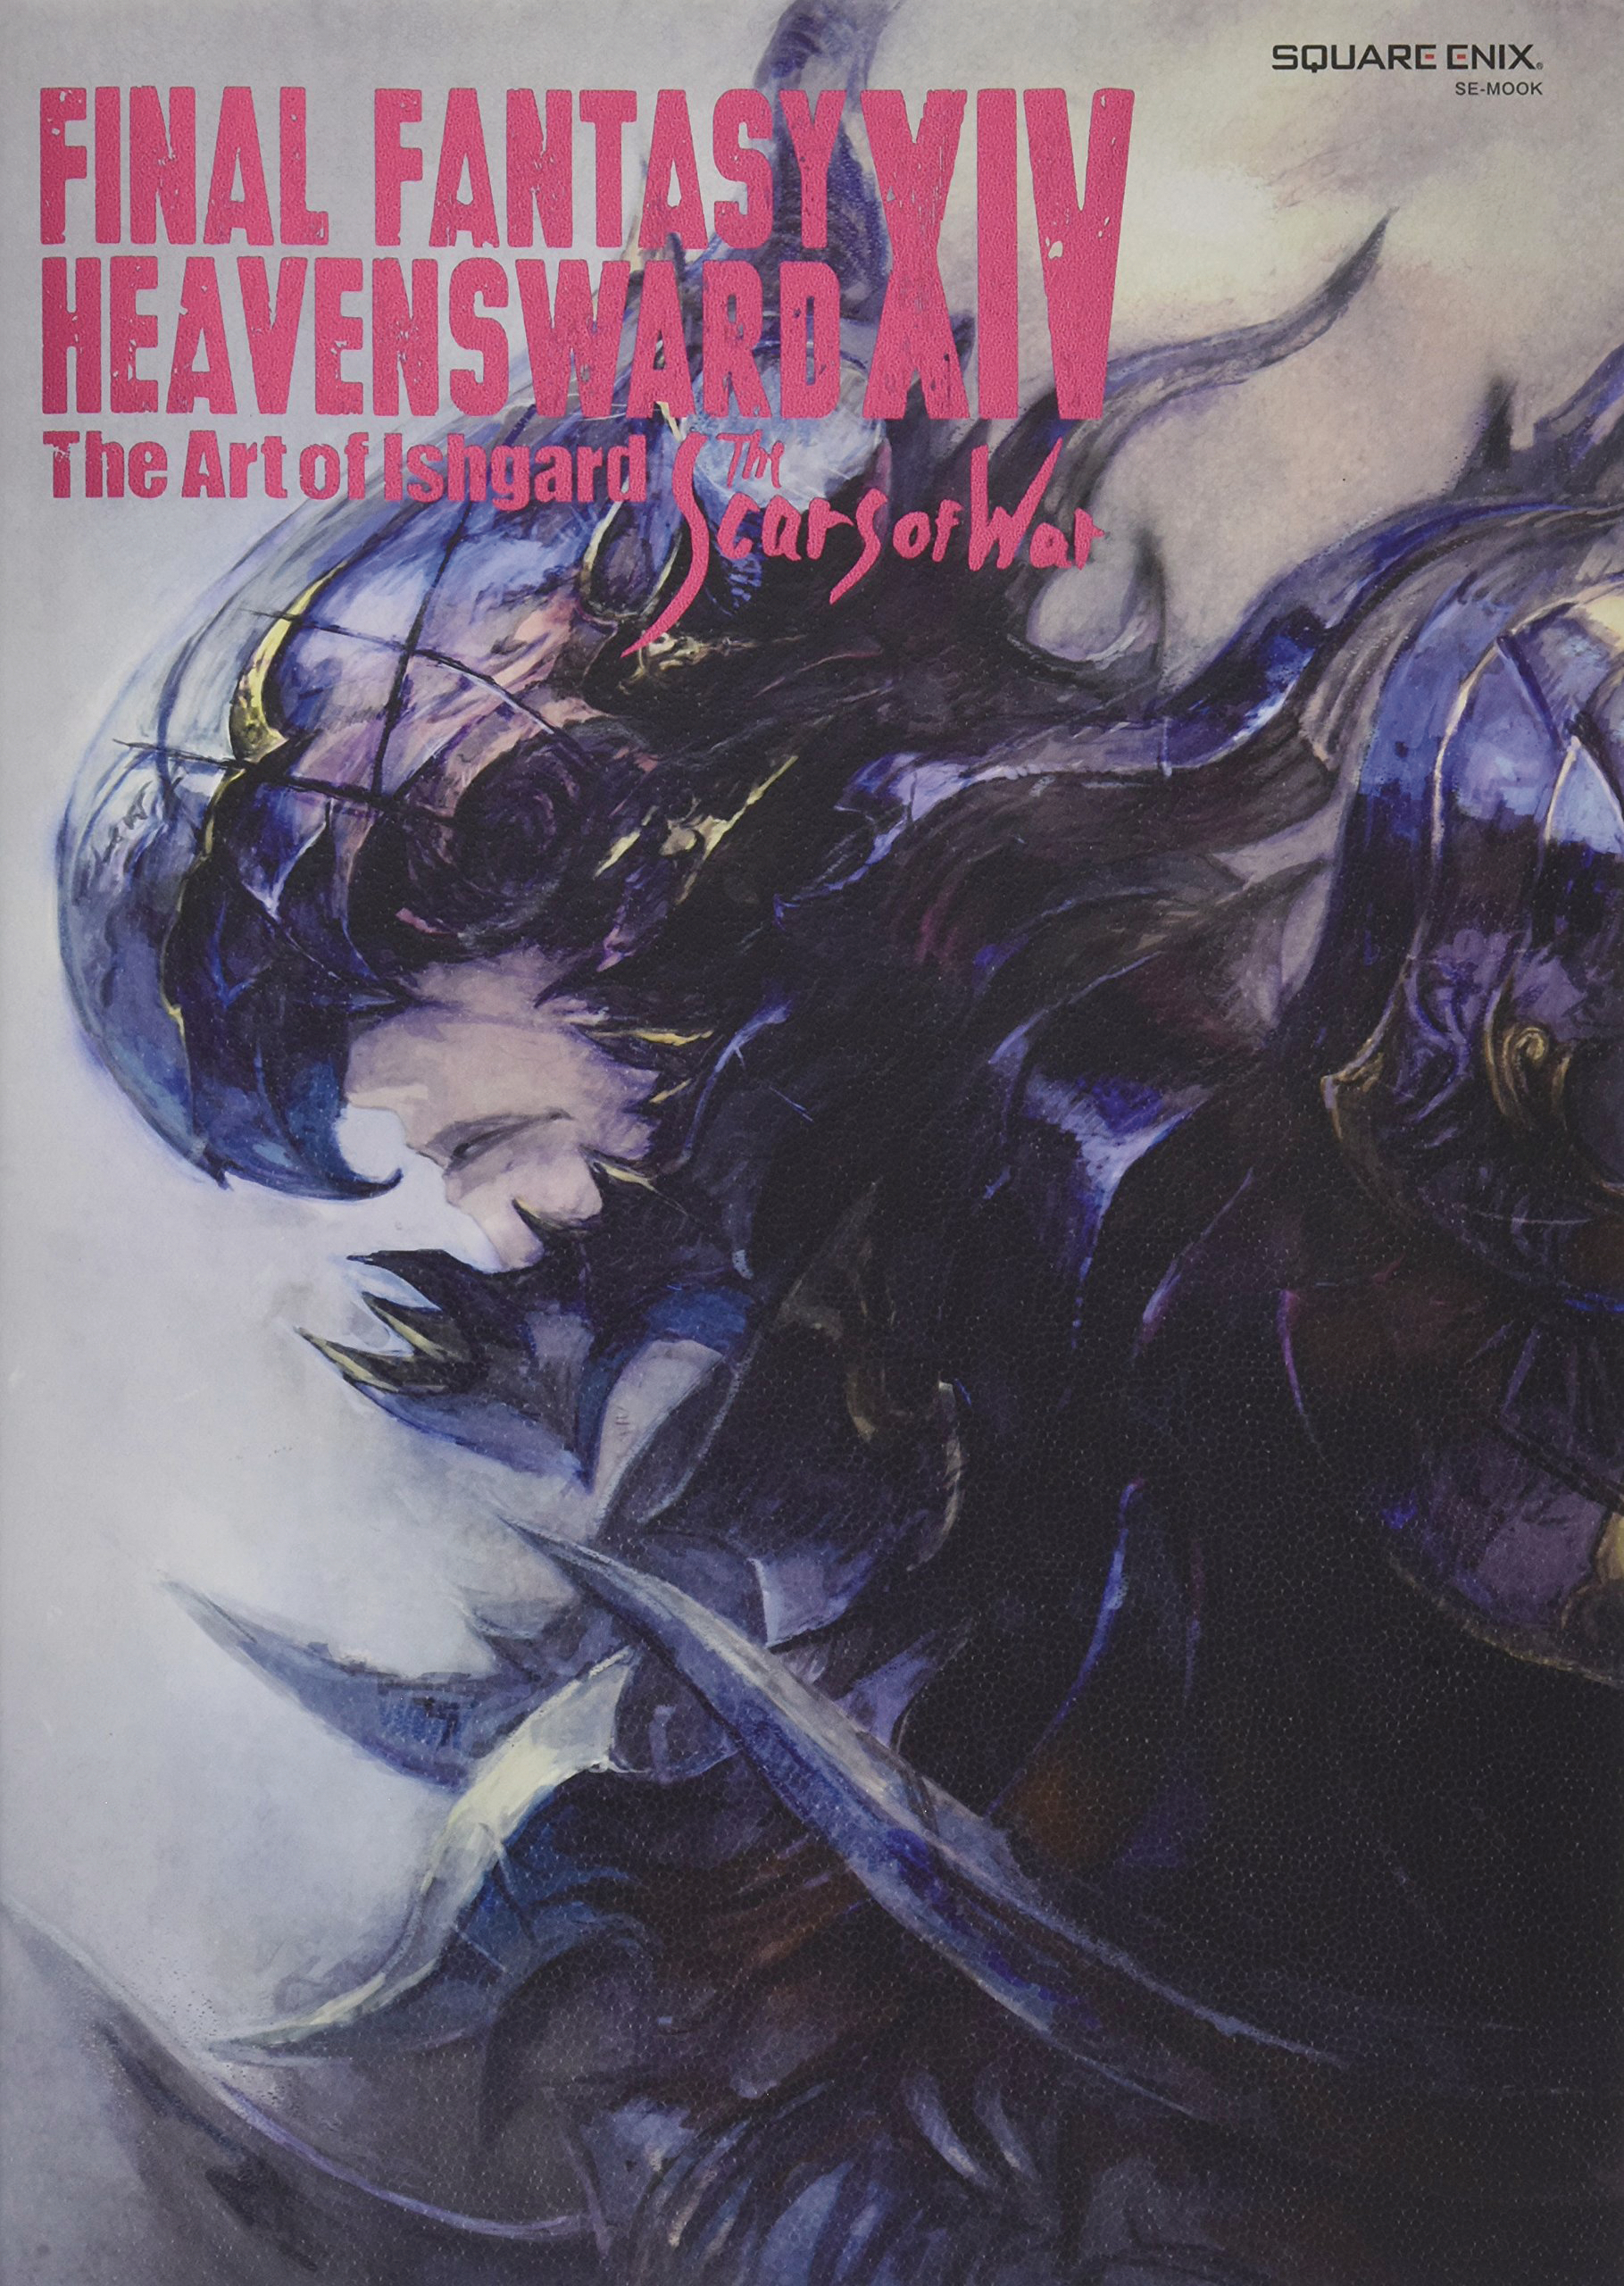 Final Fantasy XIV Heavensward Art of Ishgard Volume 2 Scars of War